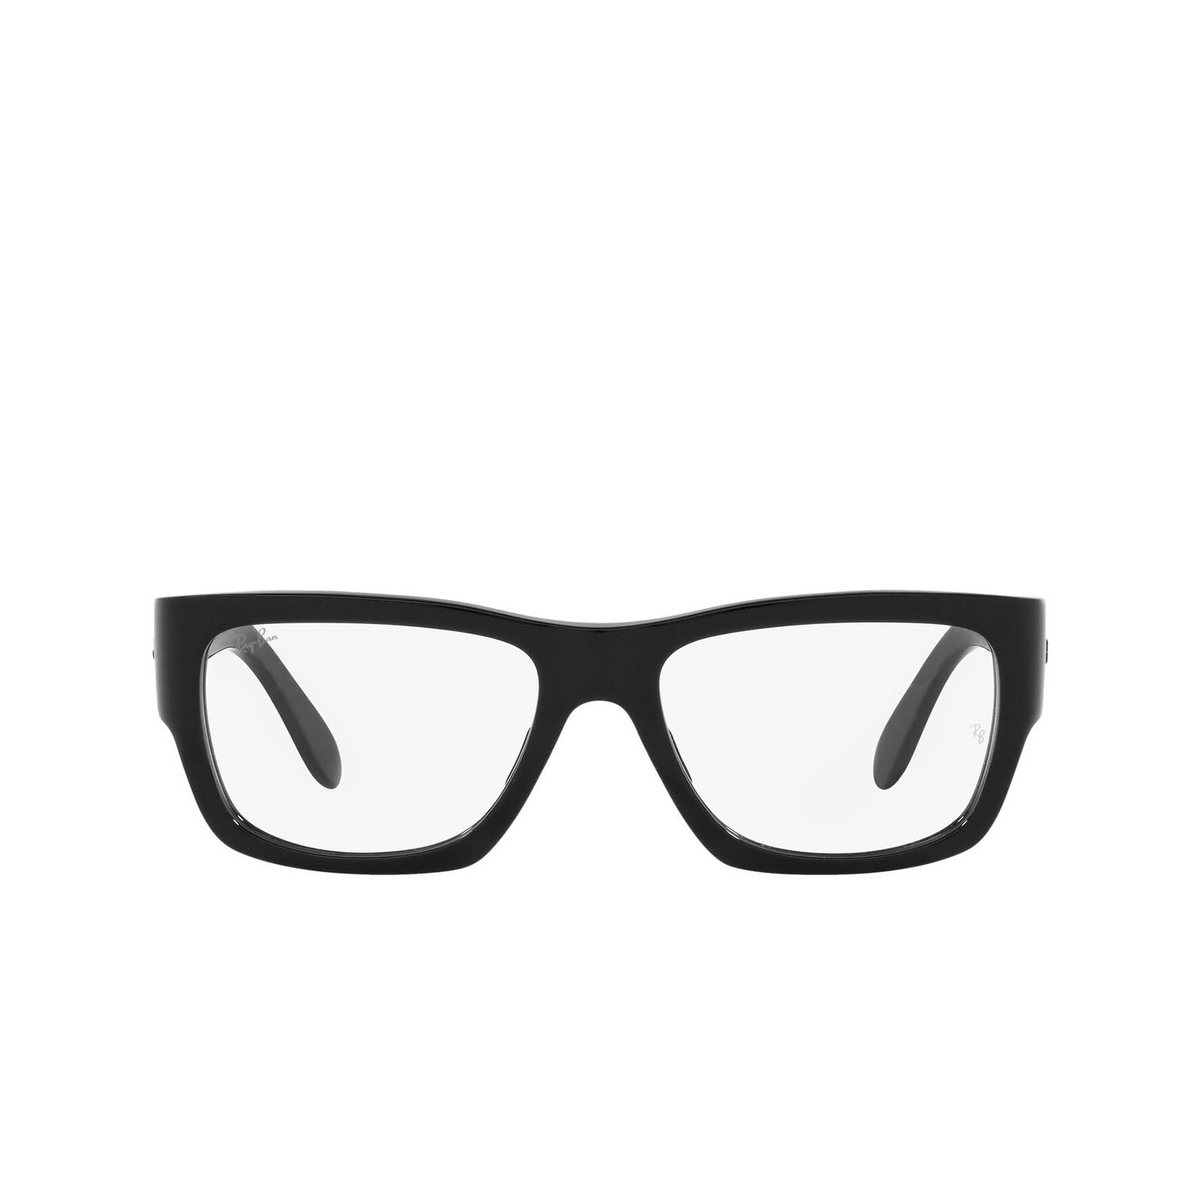 Ray-Ban® Square Eyeglasses: Nomad Wayfarer RX5487 color Black 2000 - front view.